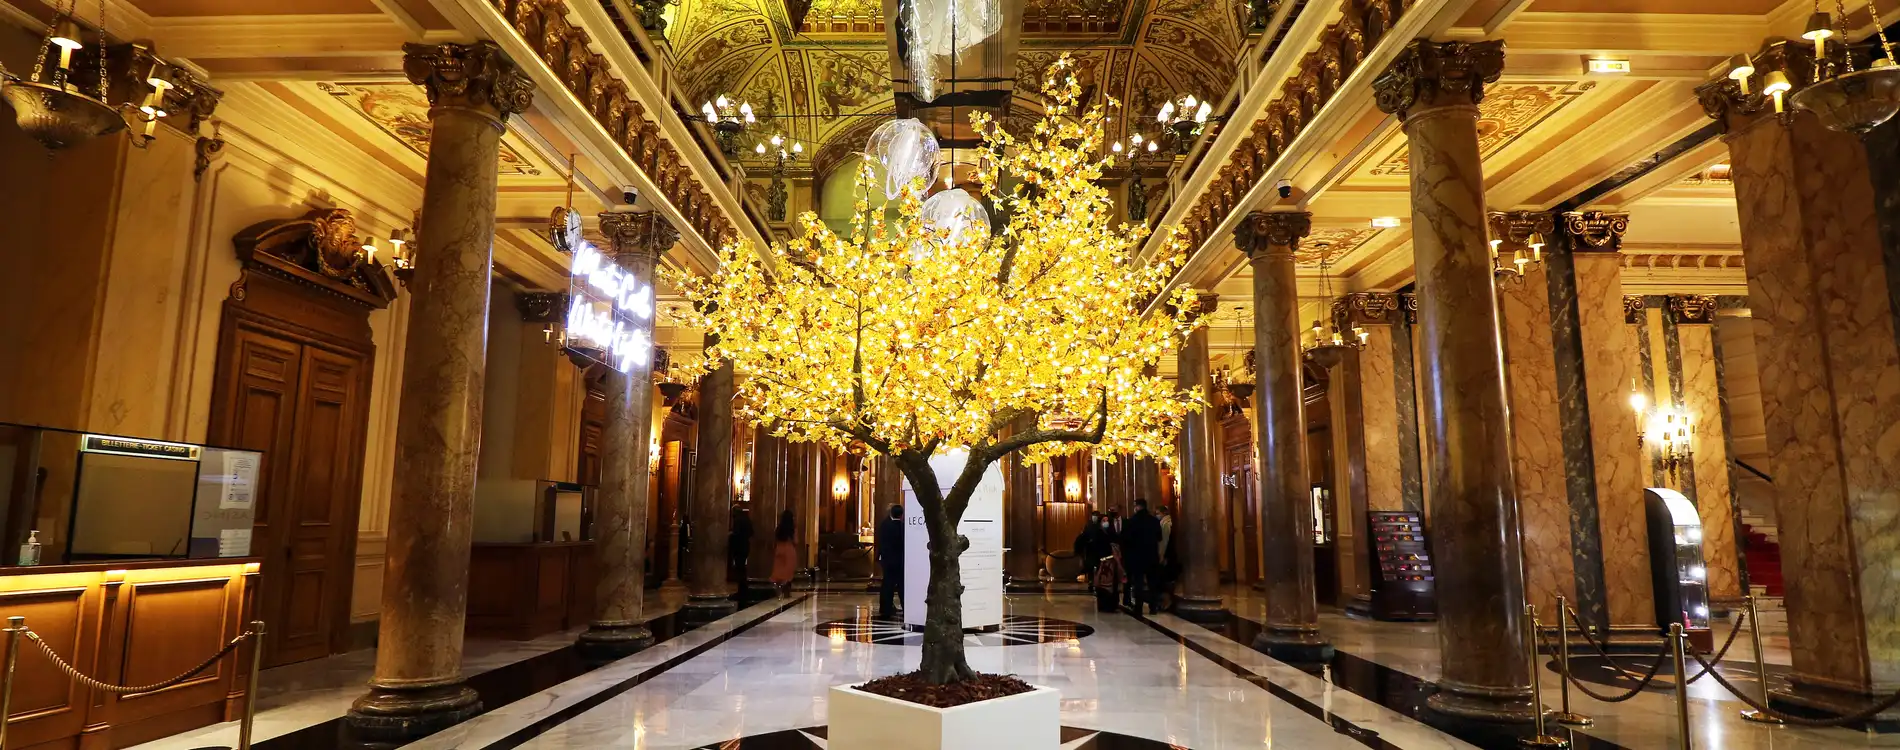 Campagne Make a Wish 2021 arbre à souhaits Atrium Casino Monaco Monte-Carlo